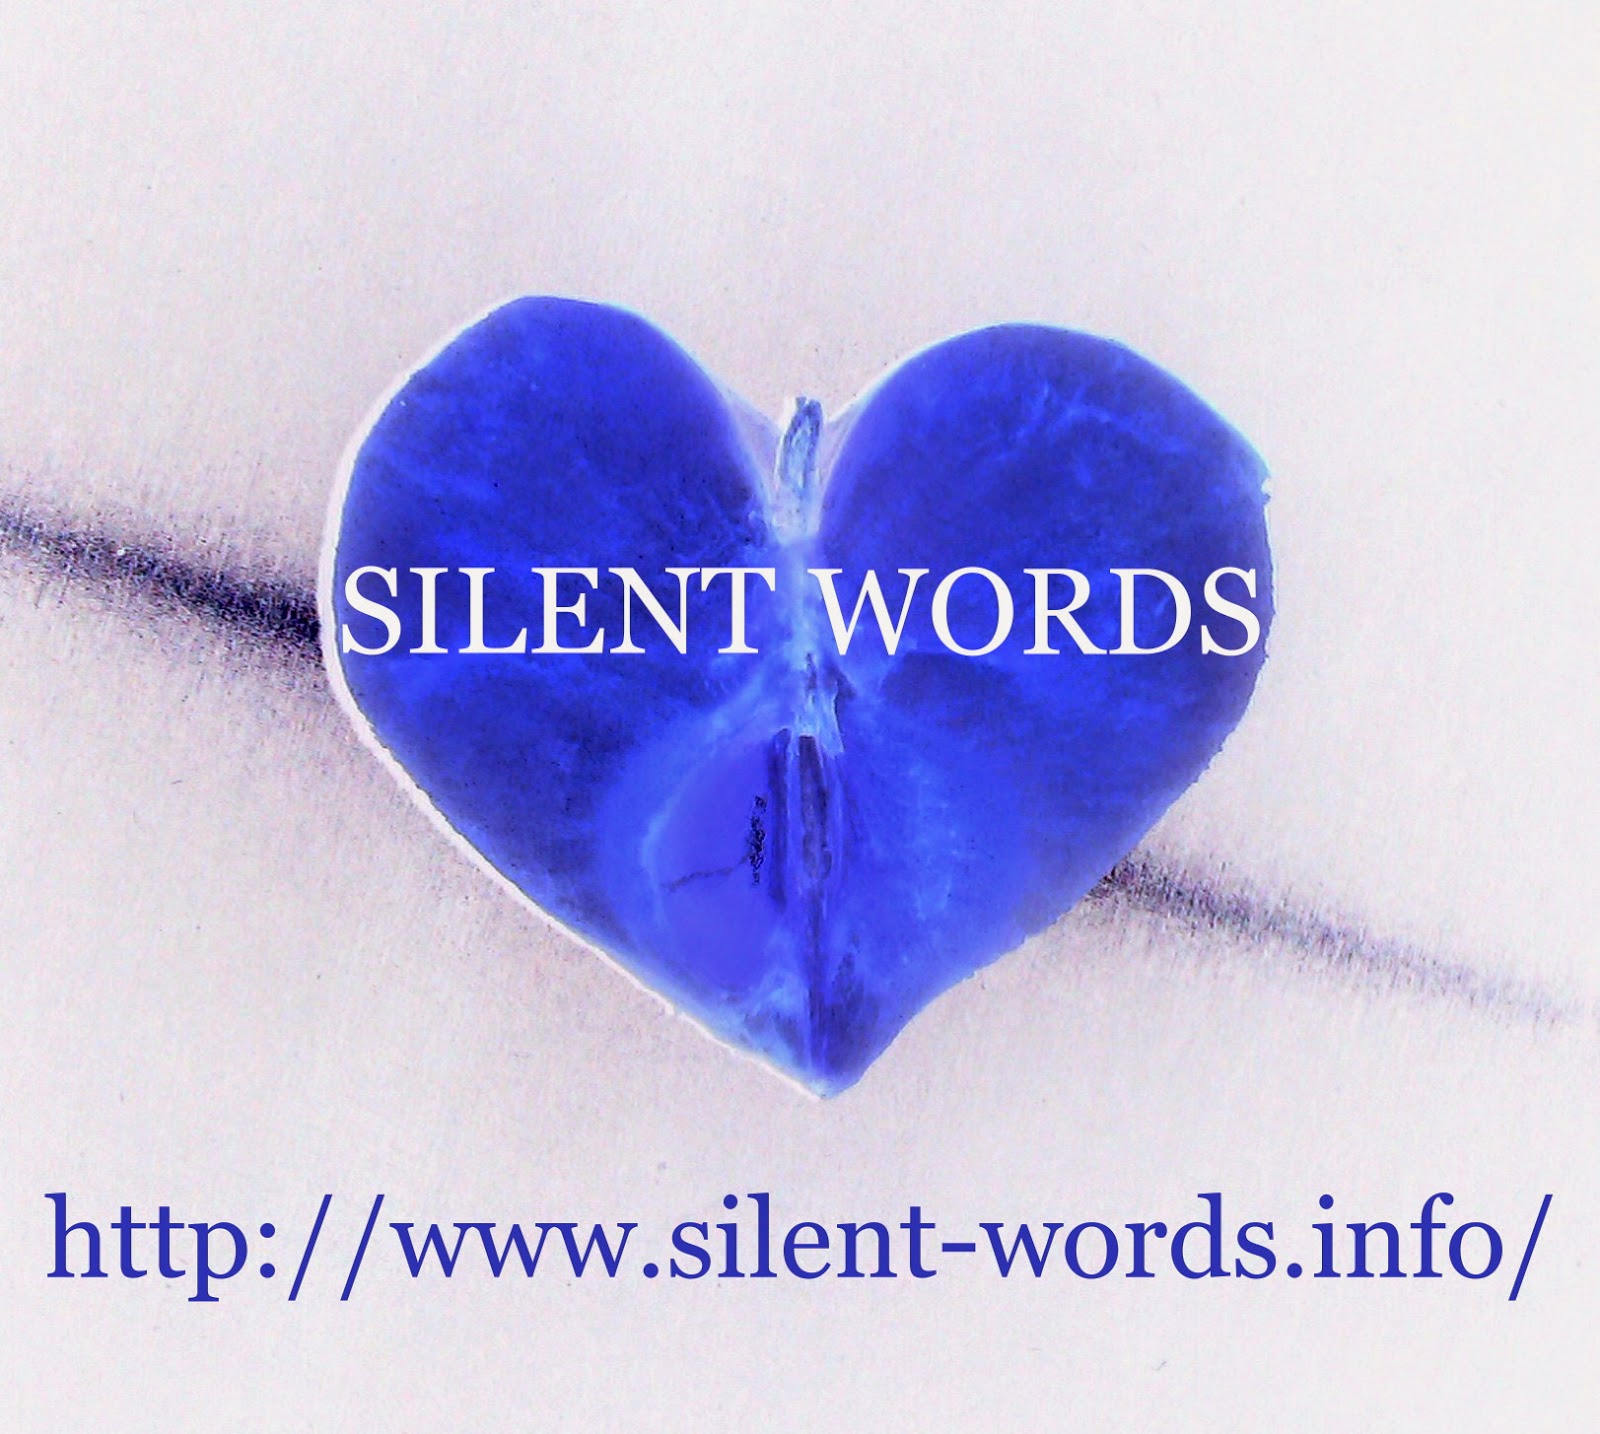 http://www.silent-words.info/